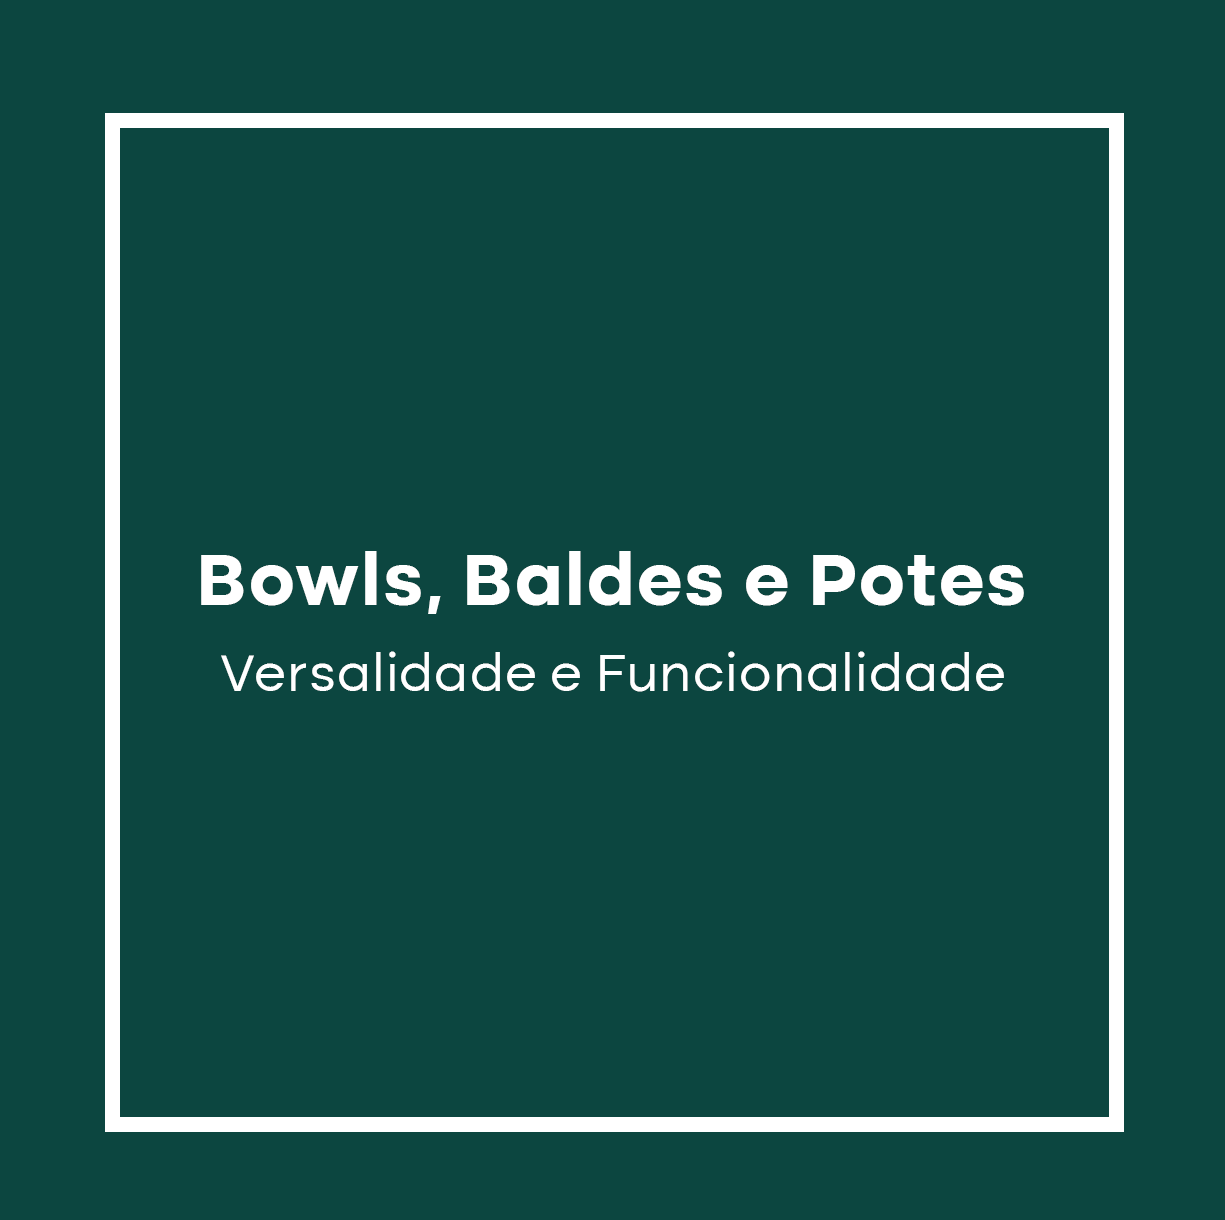 Bowls, Baldes e Potes